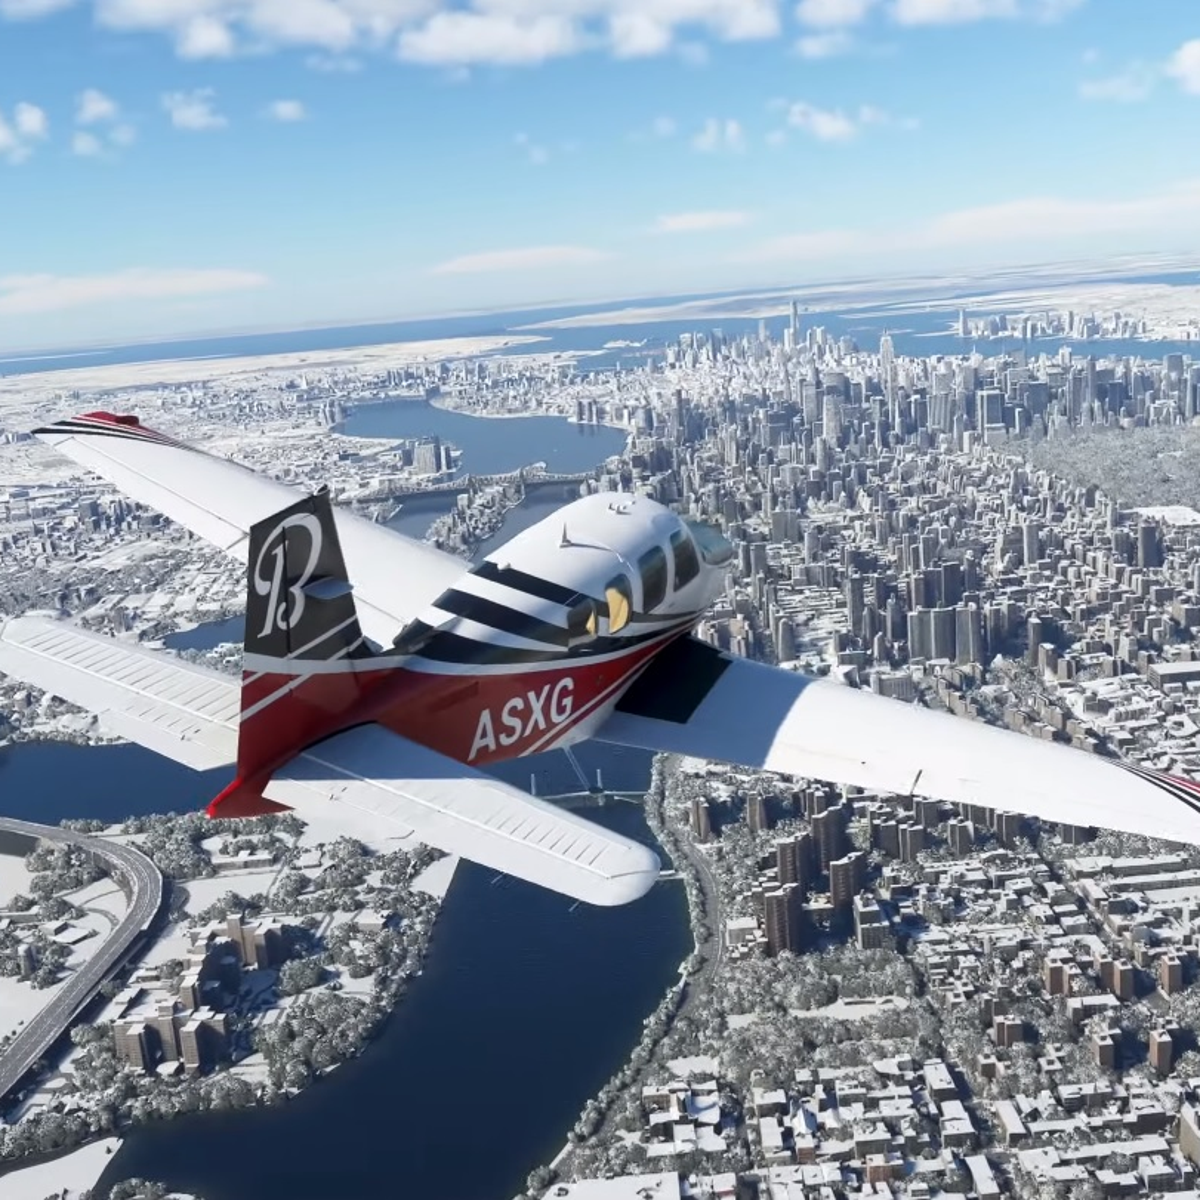 Microsoft Flight Simulator is coming to Steam